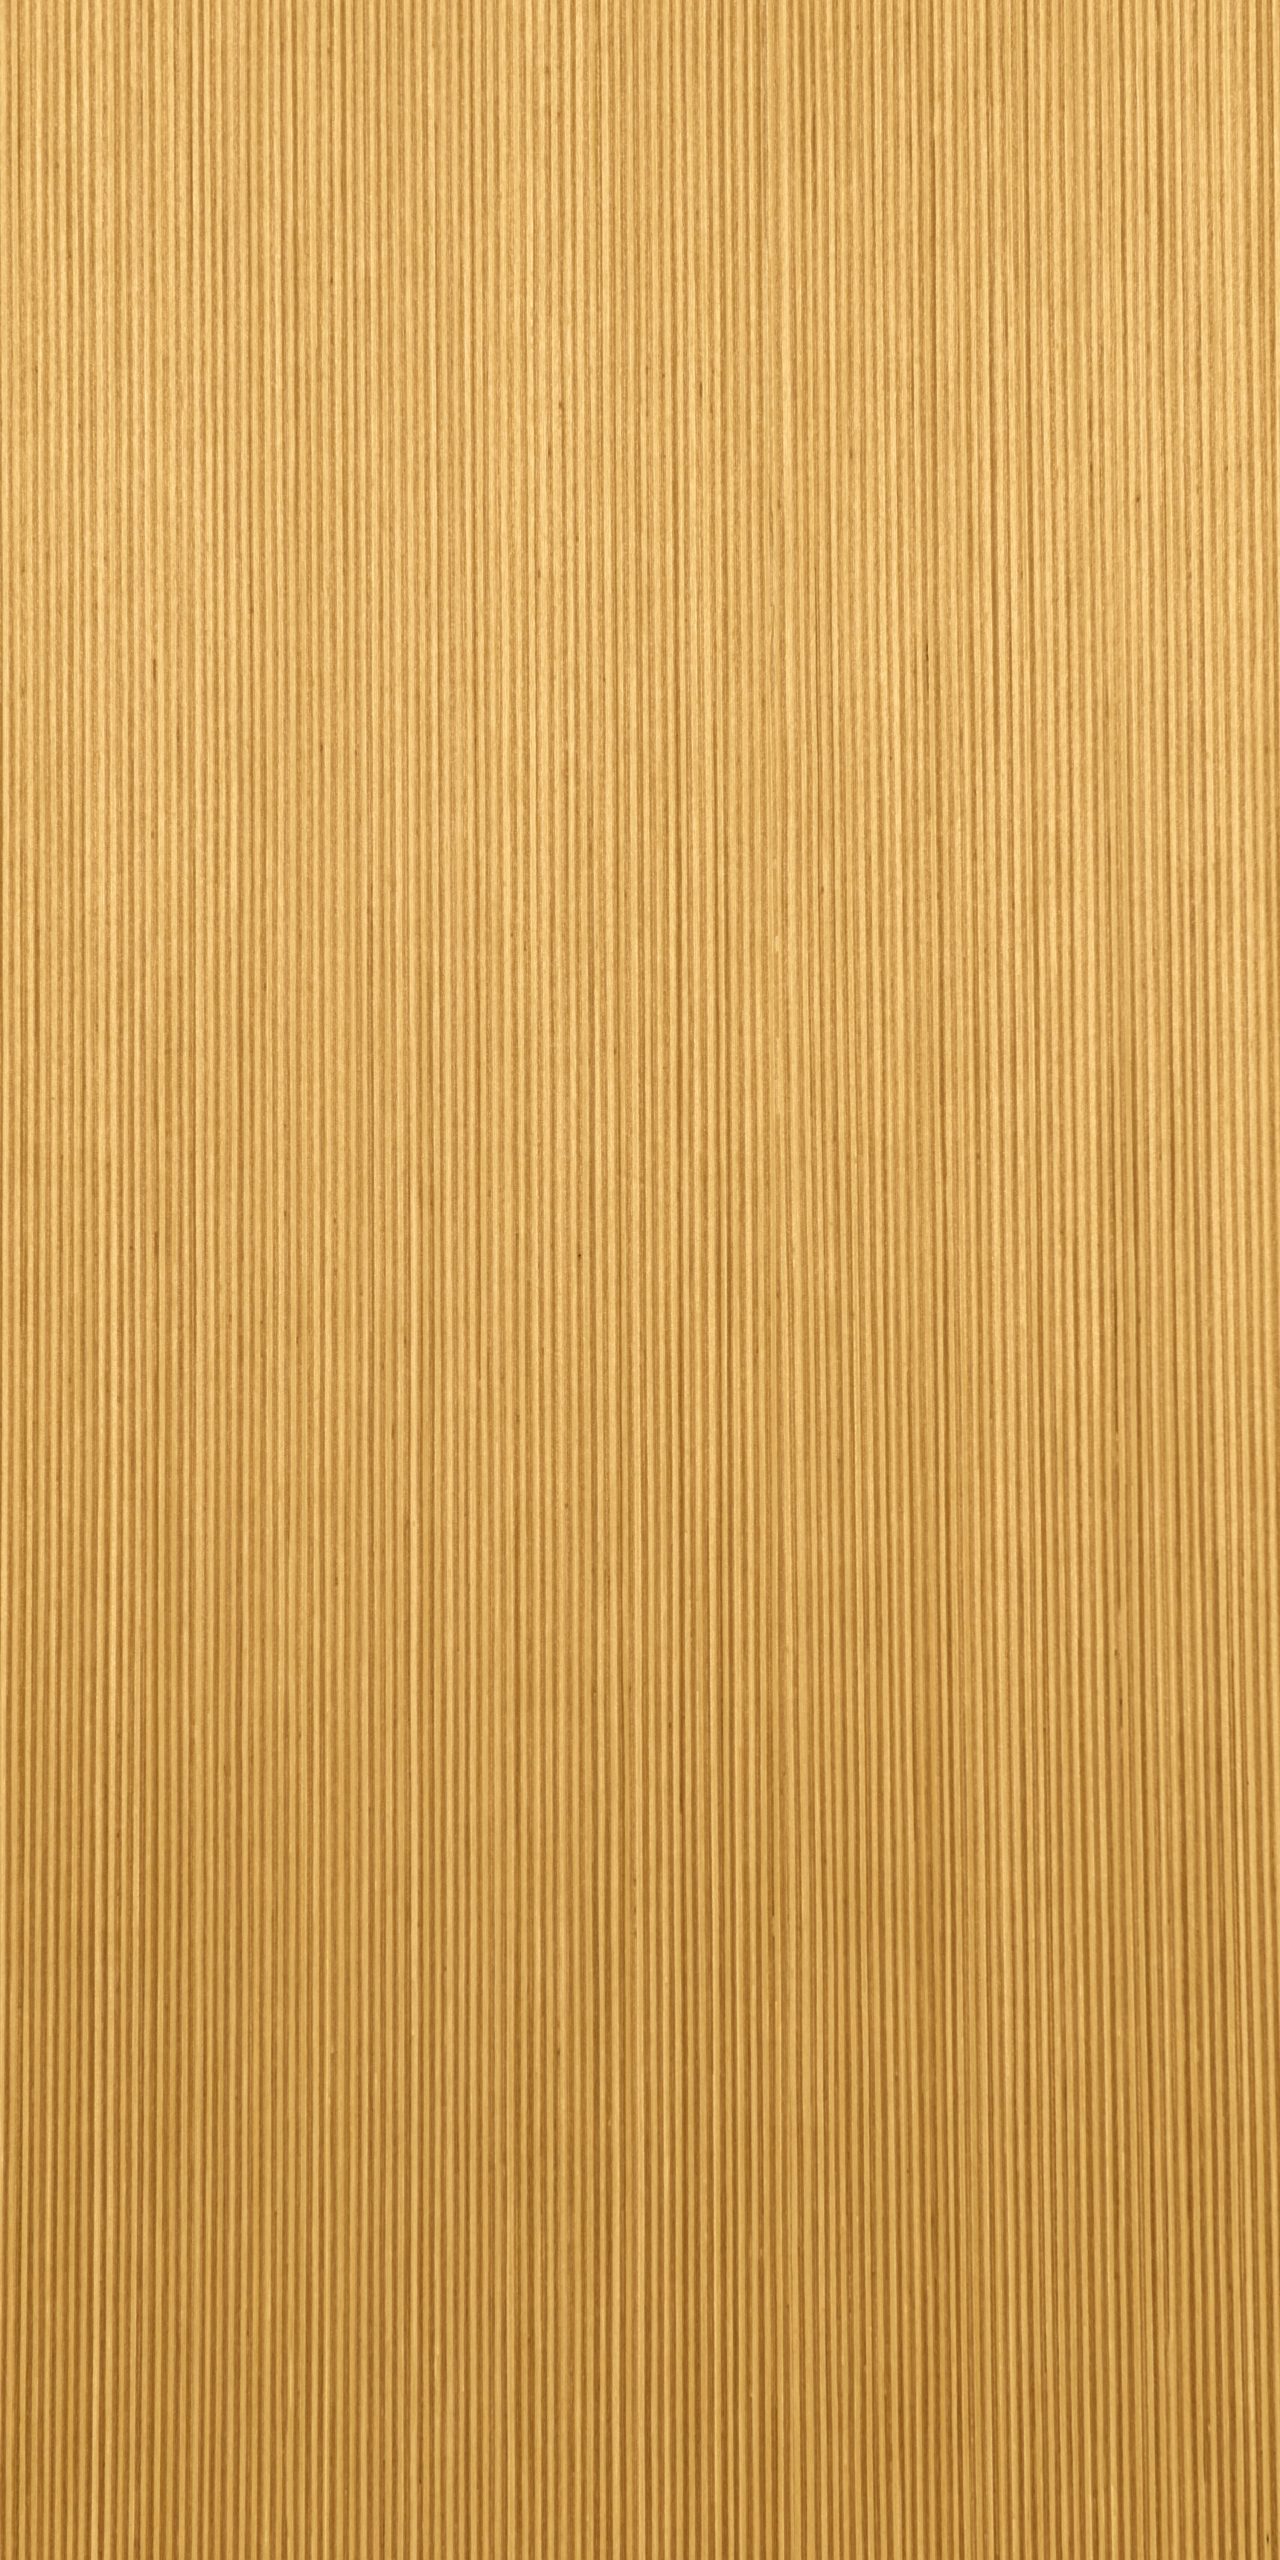 825 Recon Wood Layer Veneer plywood, Billiona Enterprise Singapore